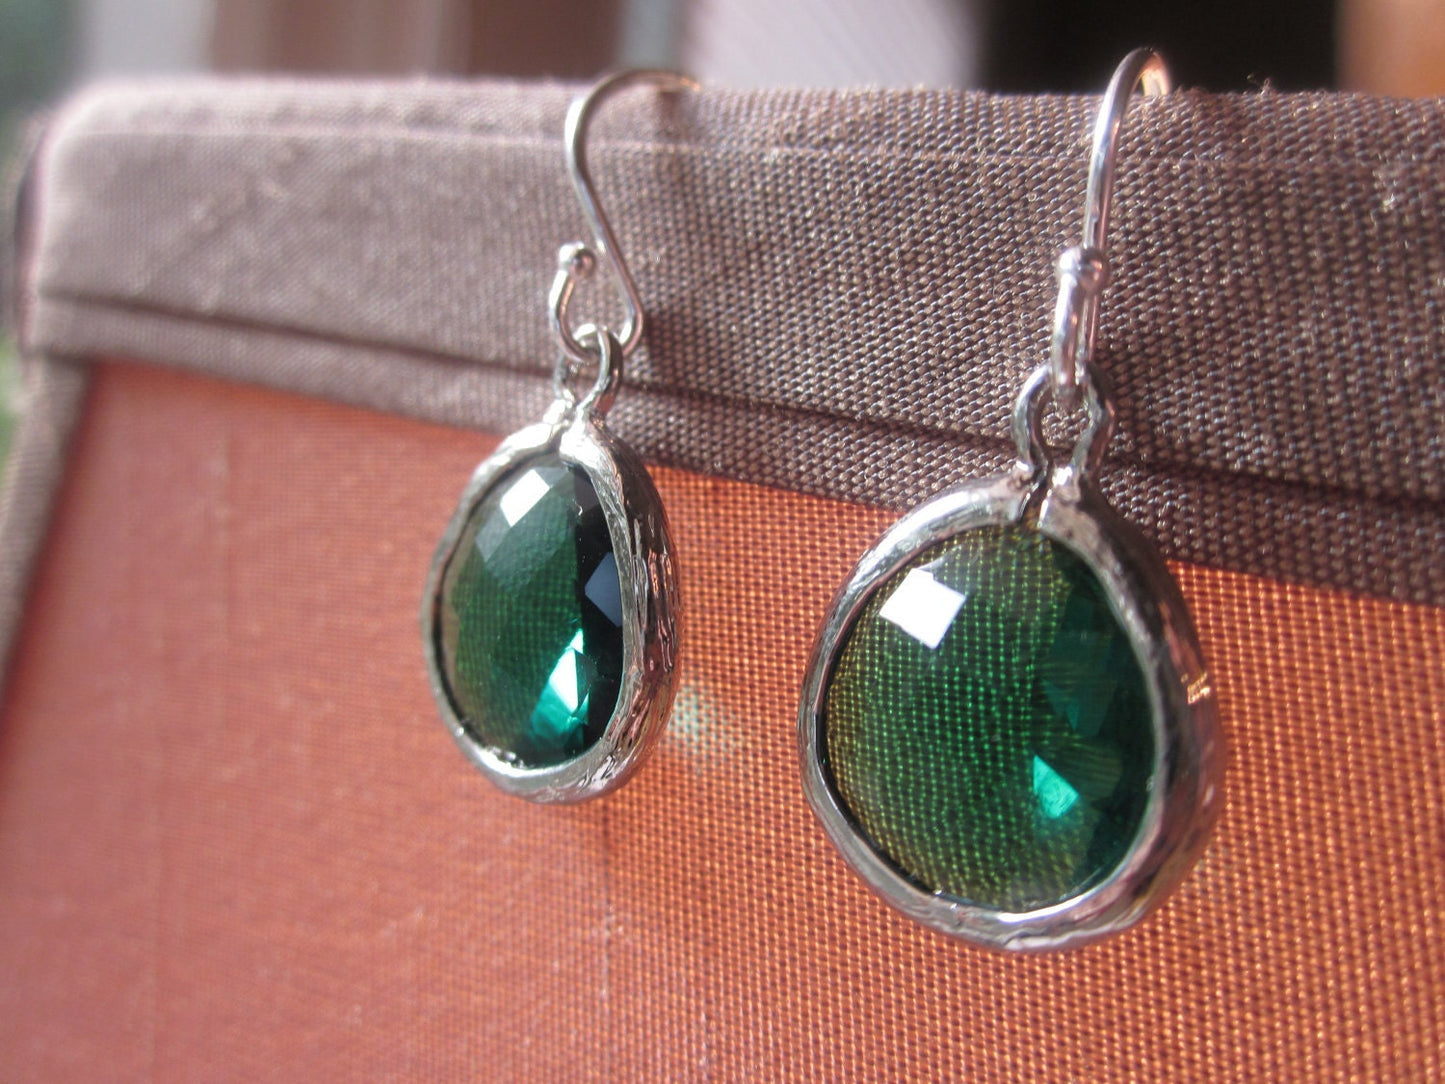 Silver Emerald Green Earrings Sterling Silver Earwires - Bridesmaid Earrings - Bridal Earrings